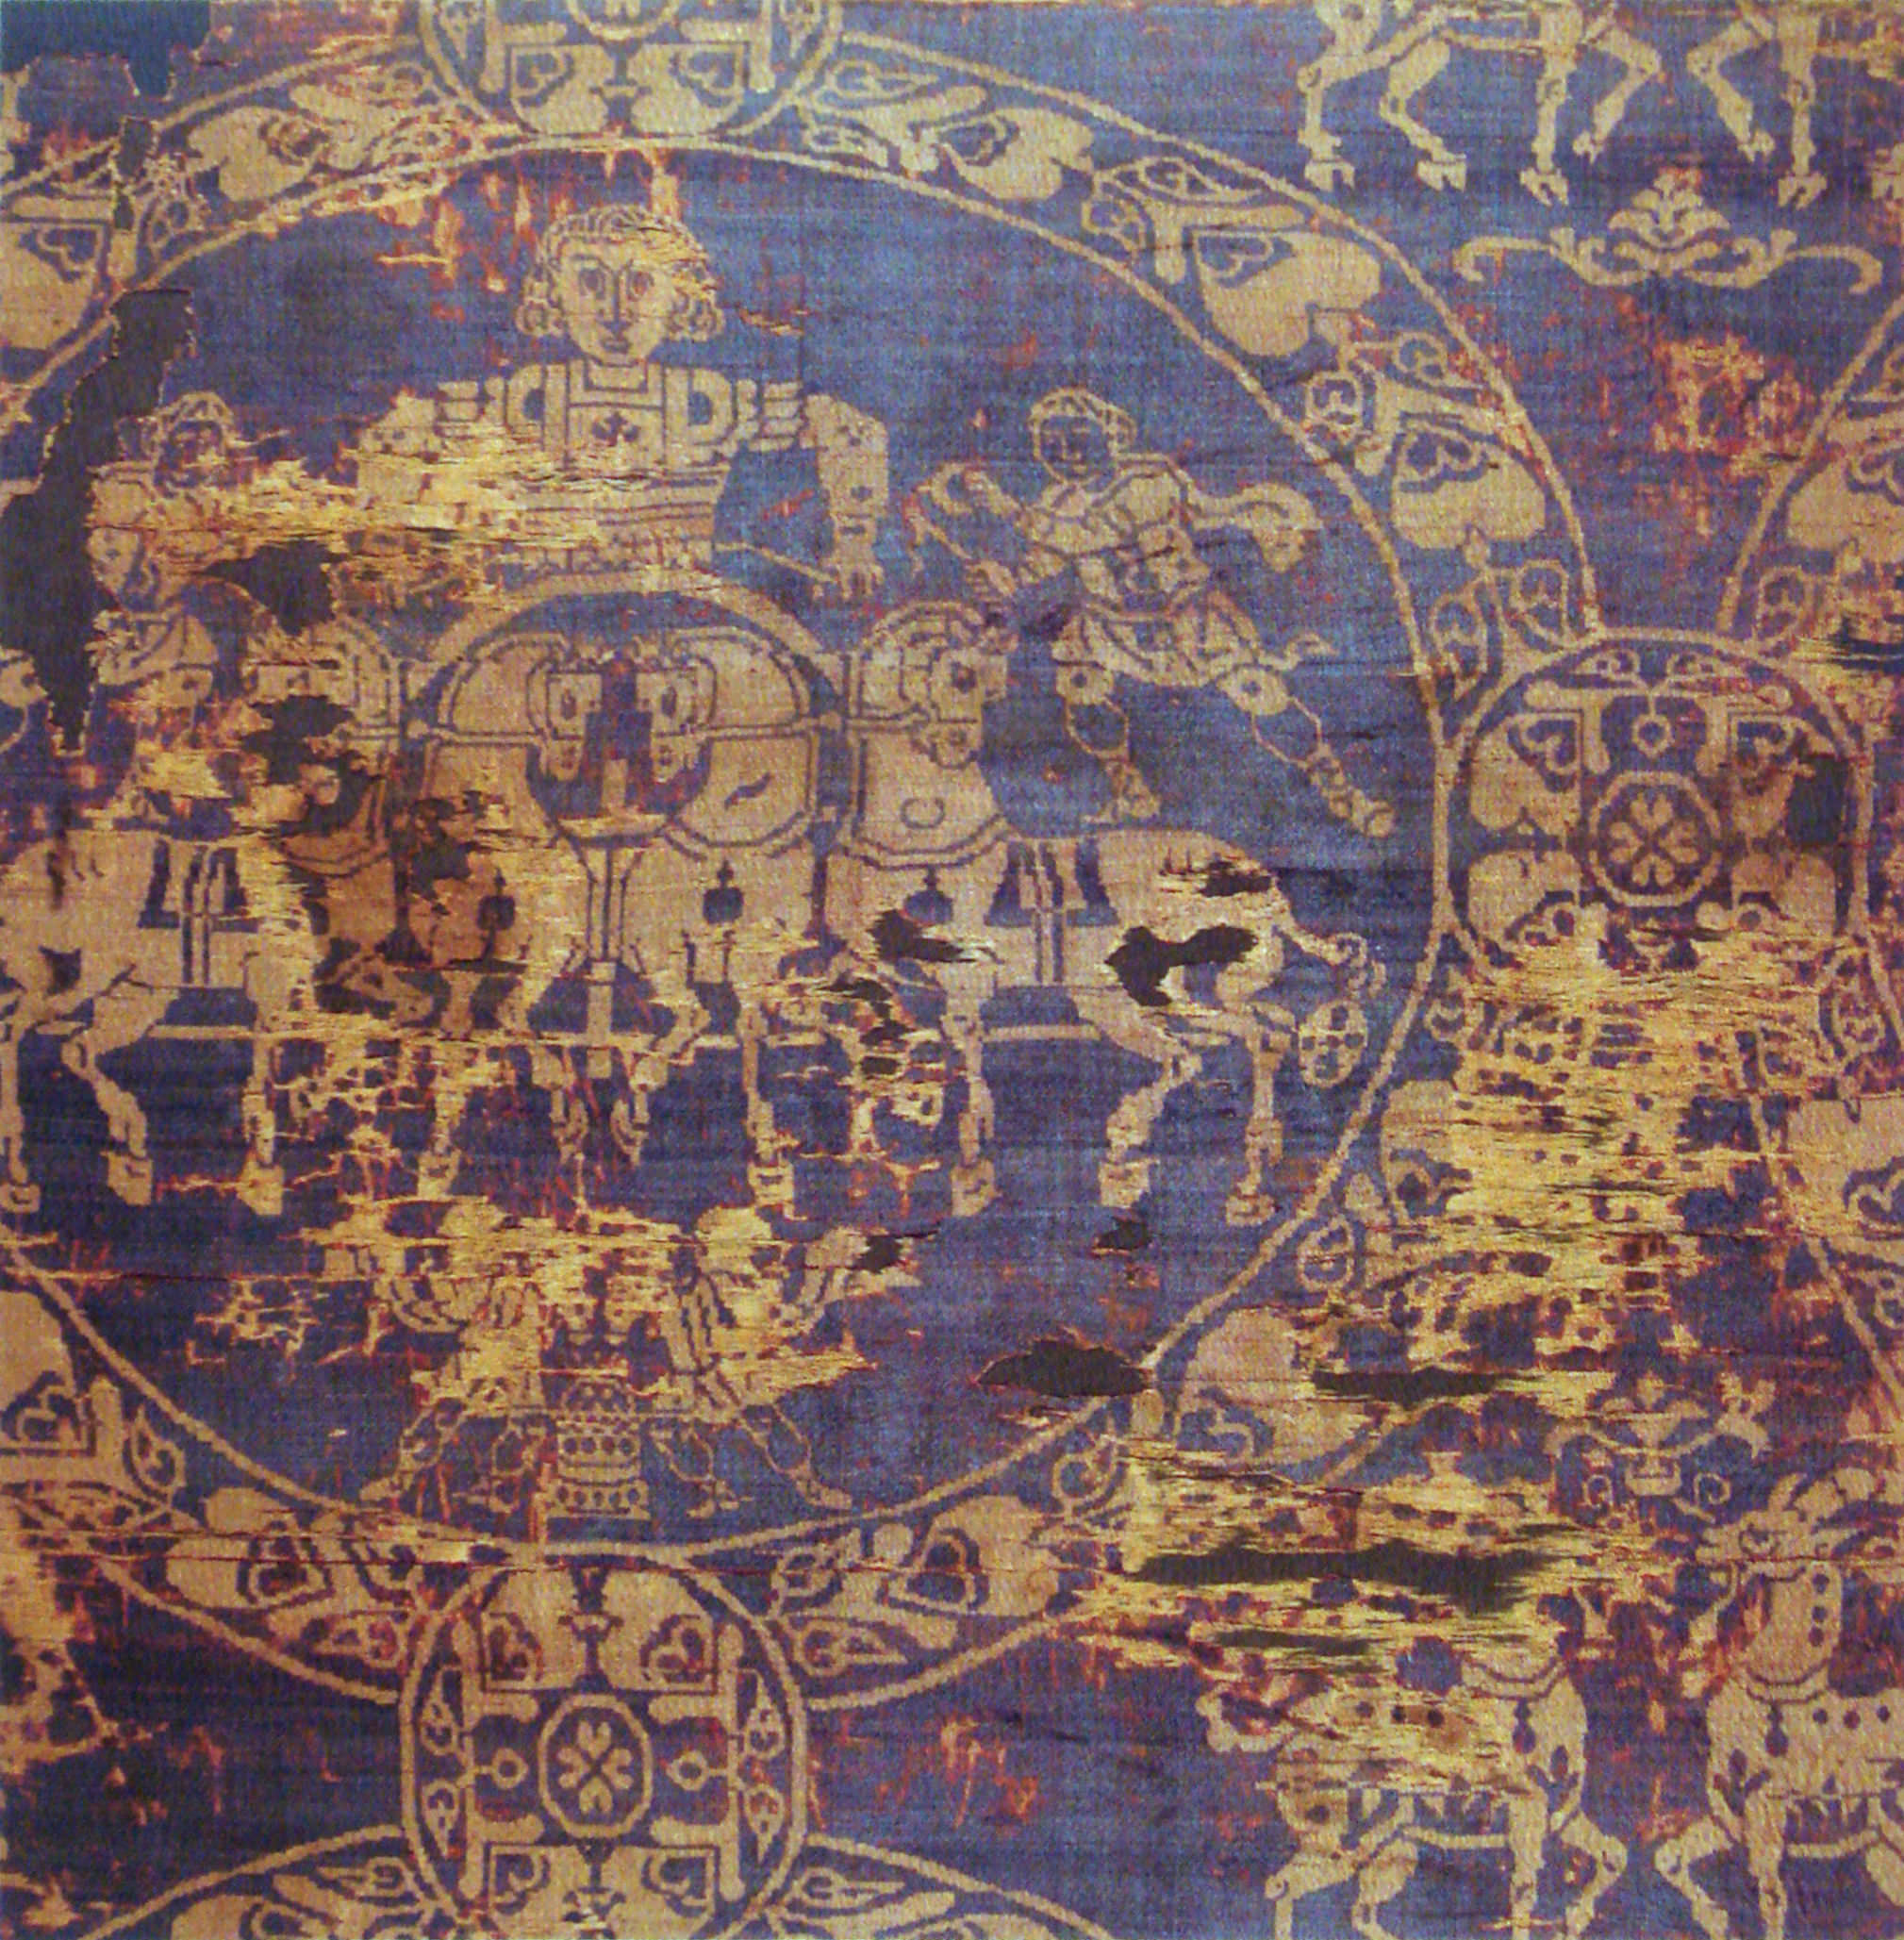 Purple Dye Kit (Ancient Phoenicia) - History Unboxed